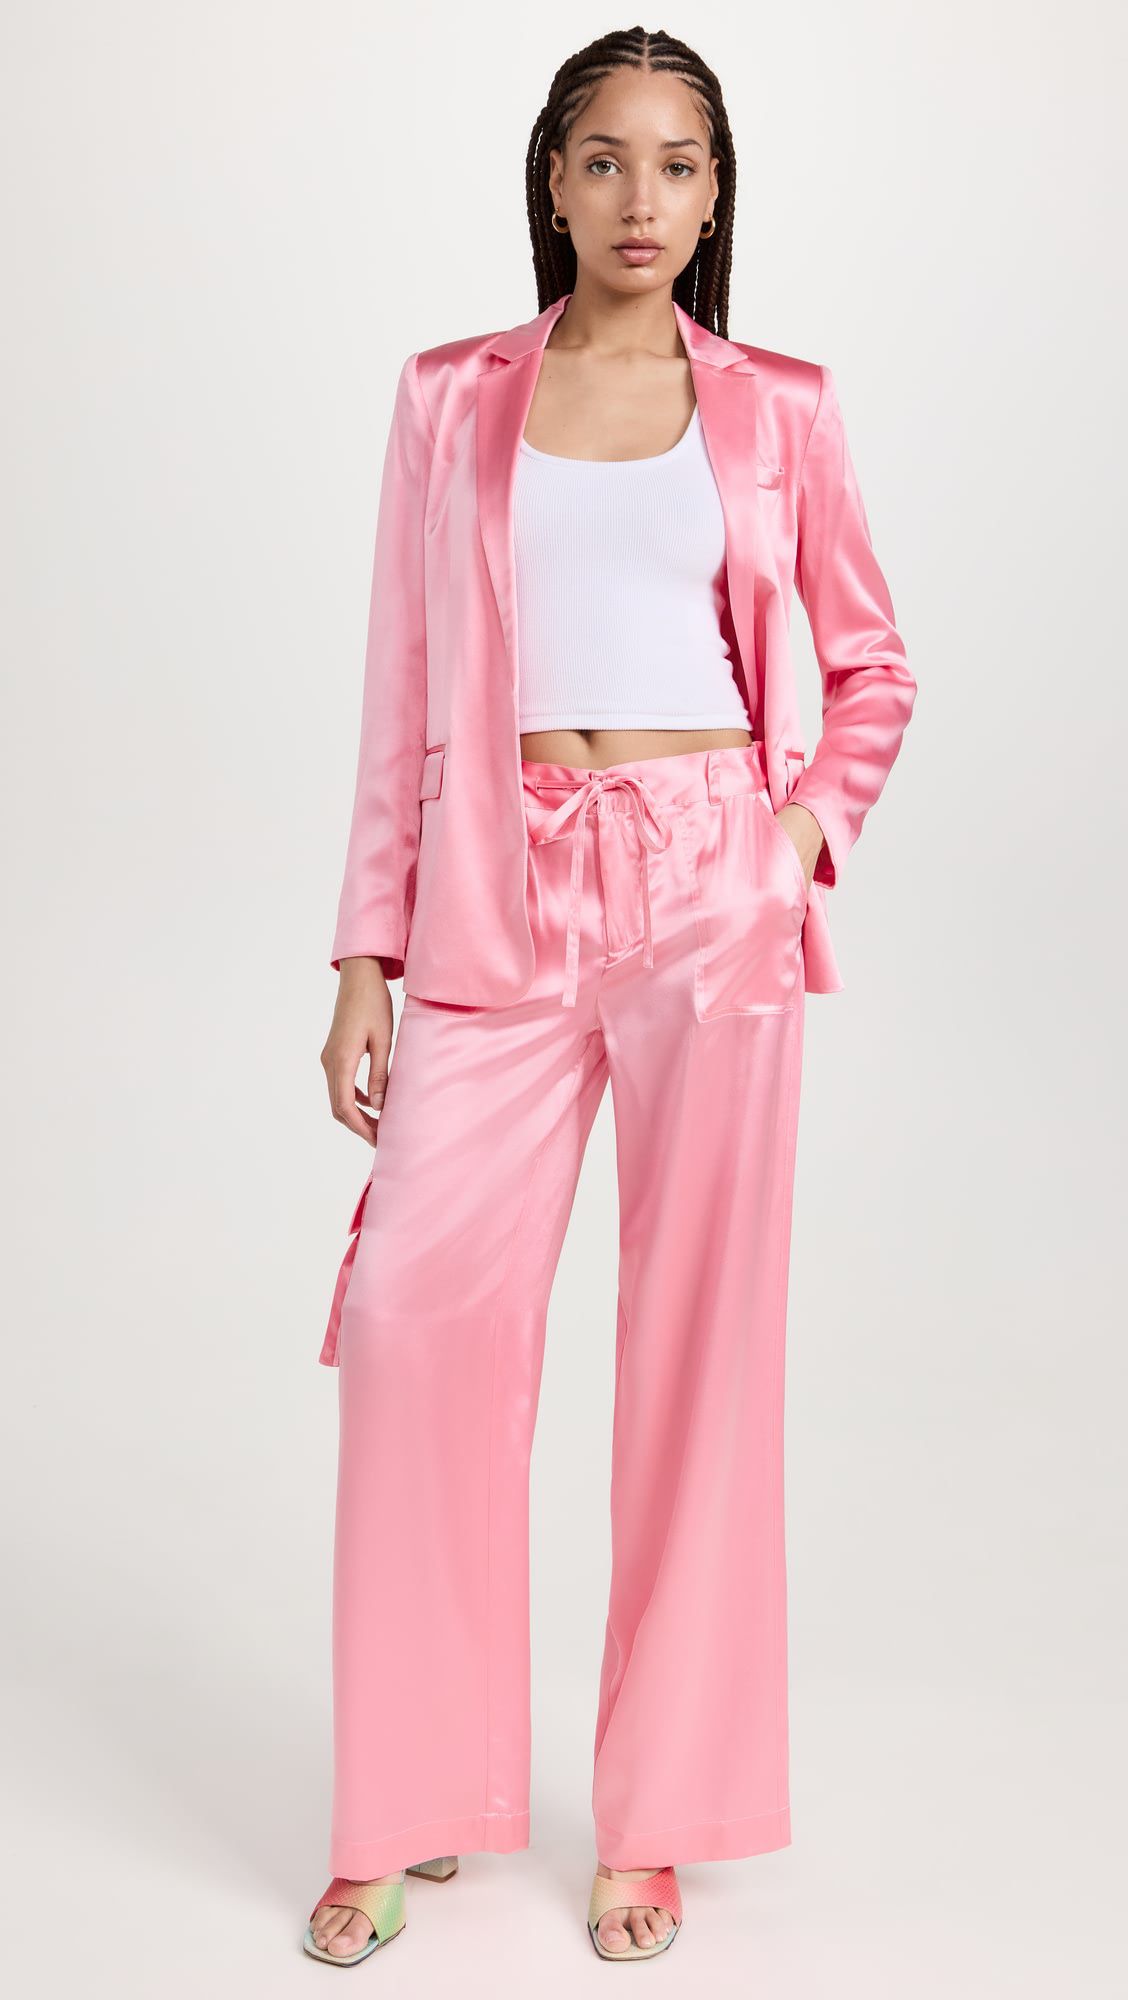 Made in China casual formal fashion pink satin loose pants